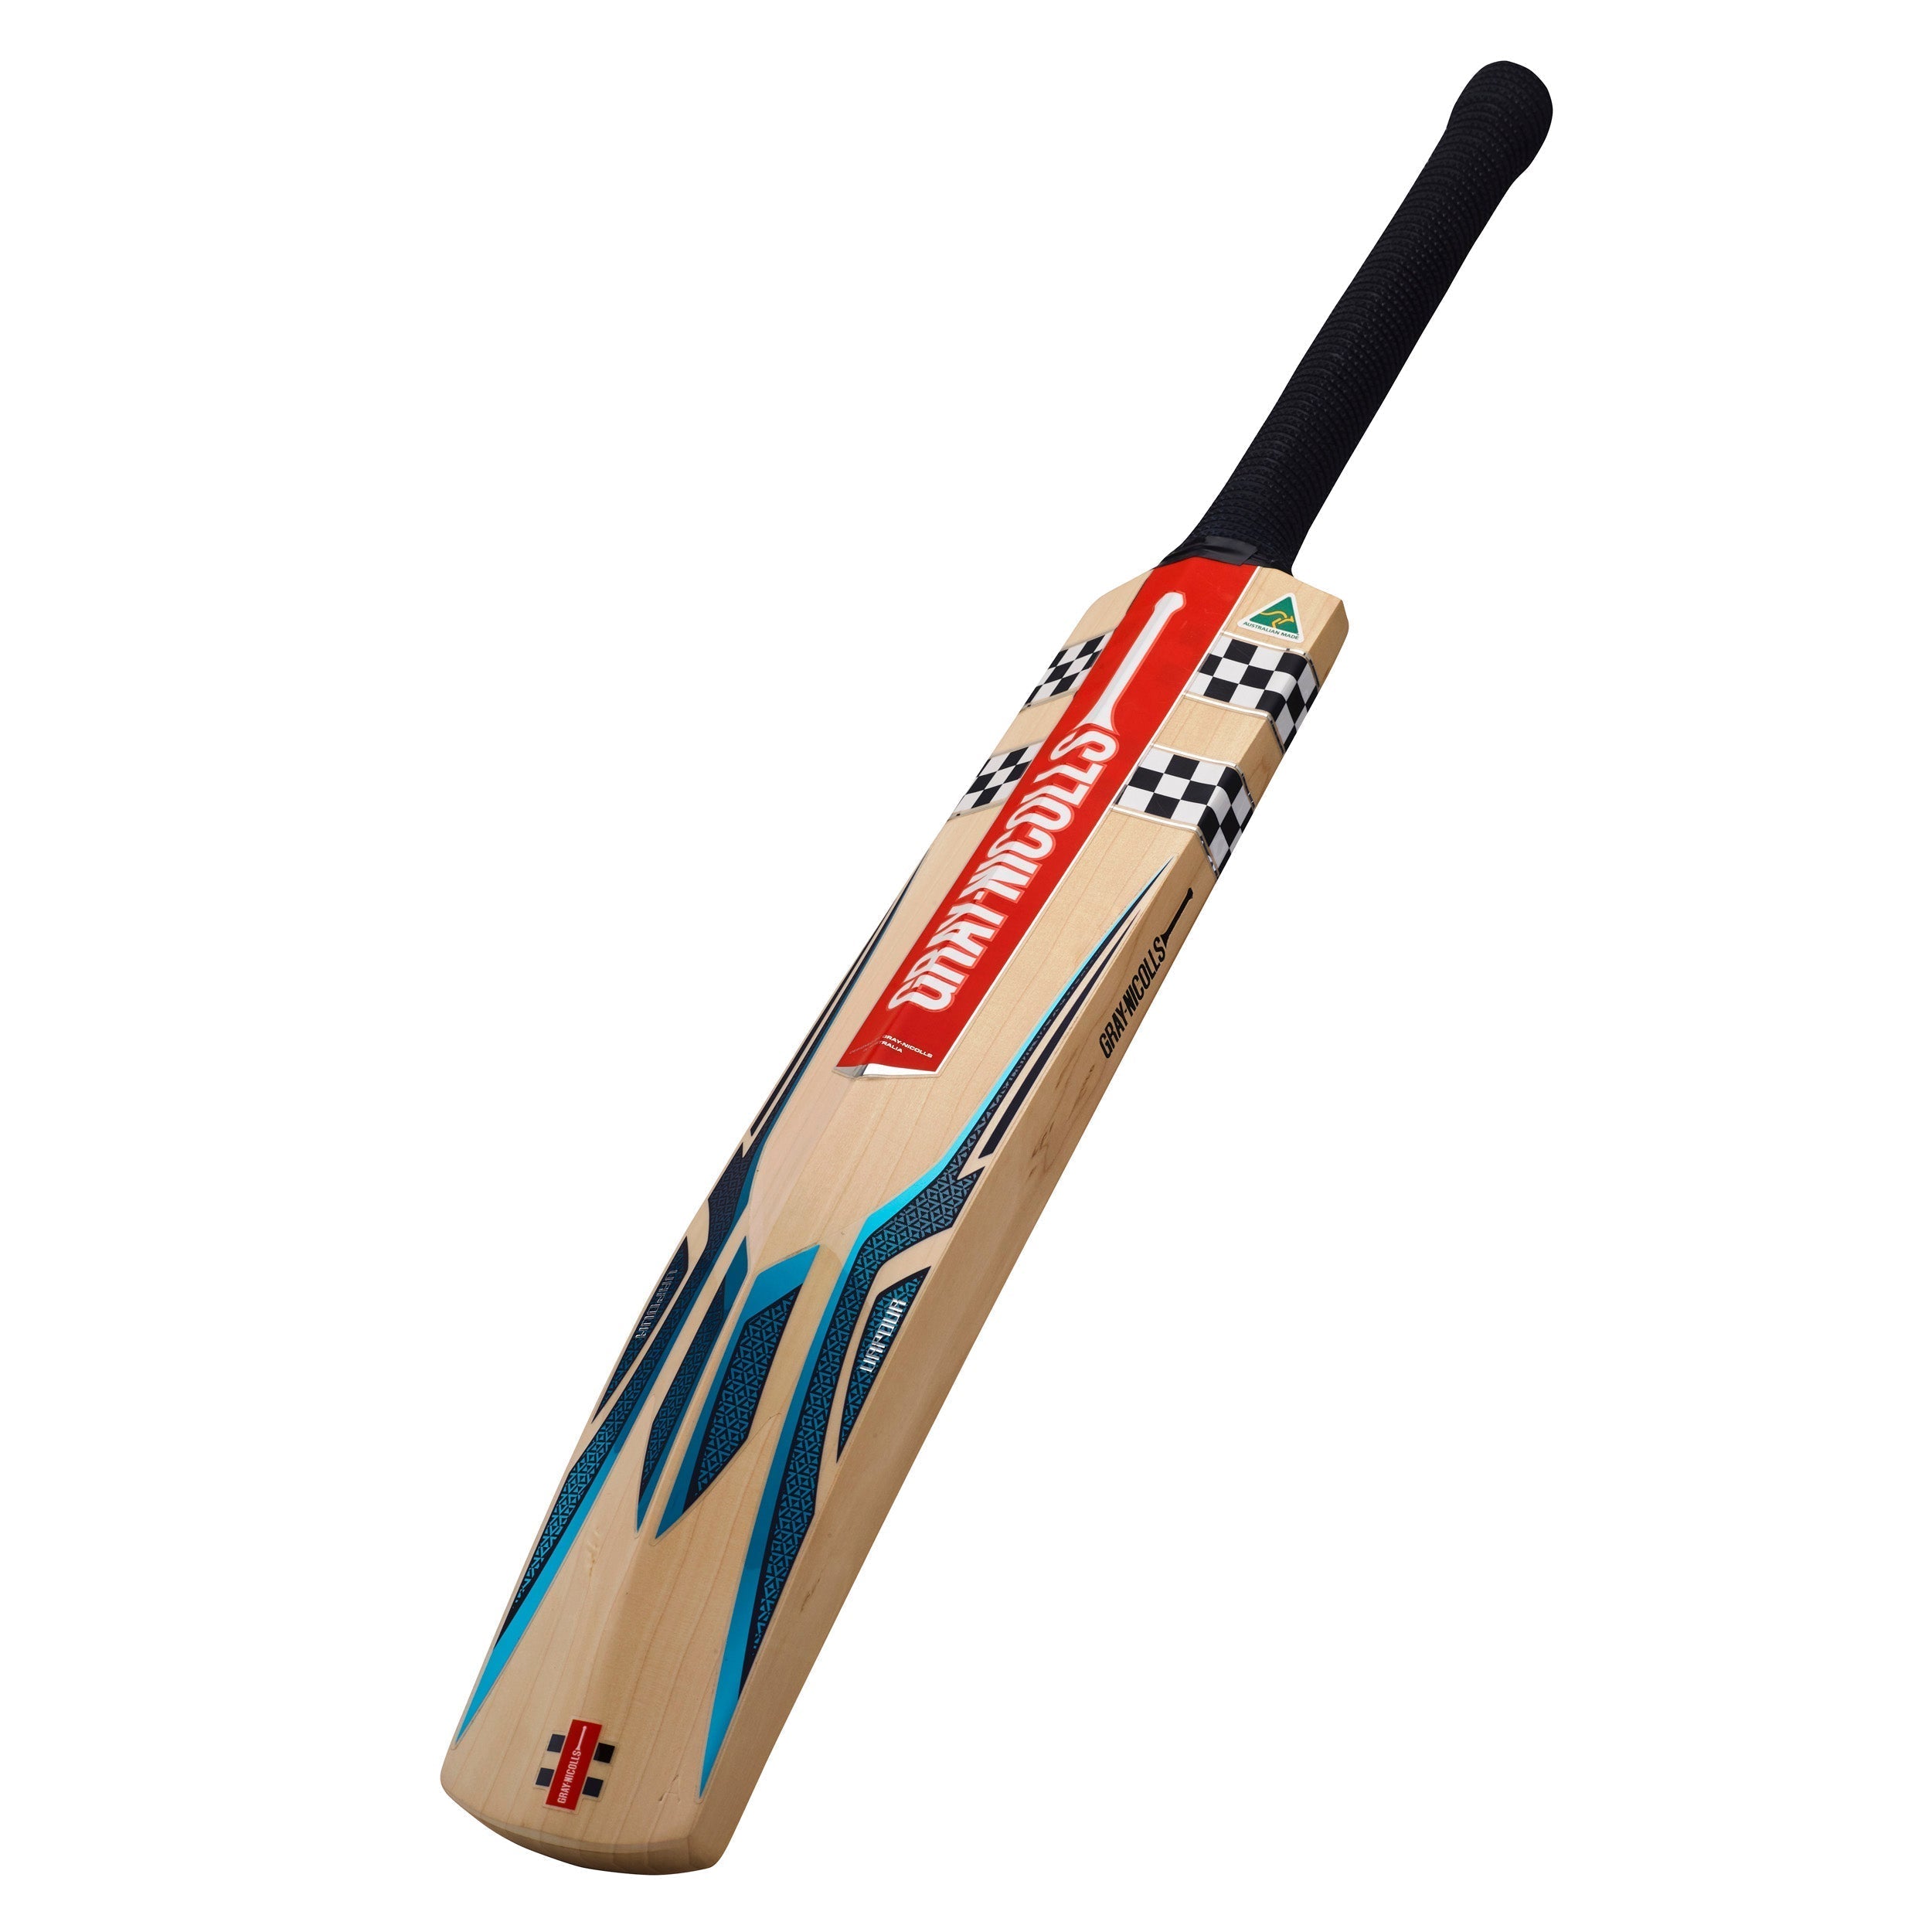 Gray Nicolls Vapour 500 Short Blade Cricket Bat